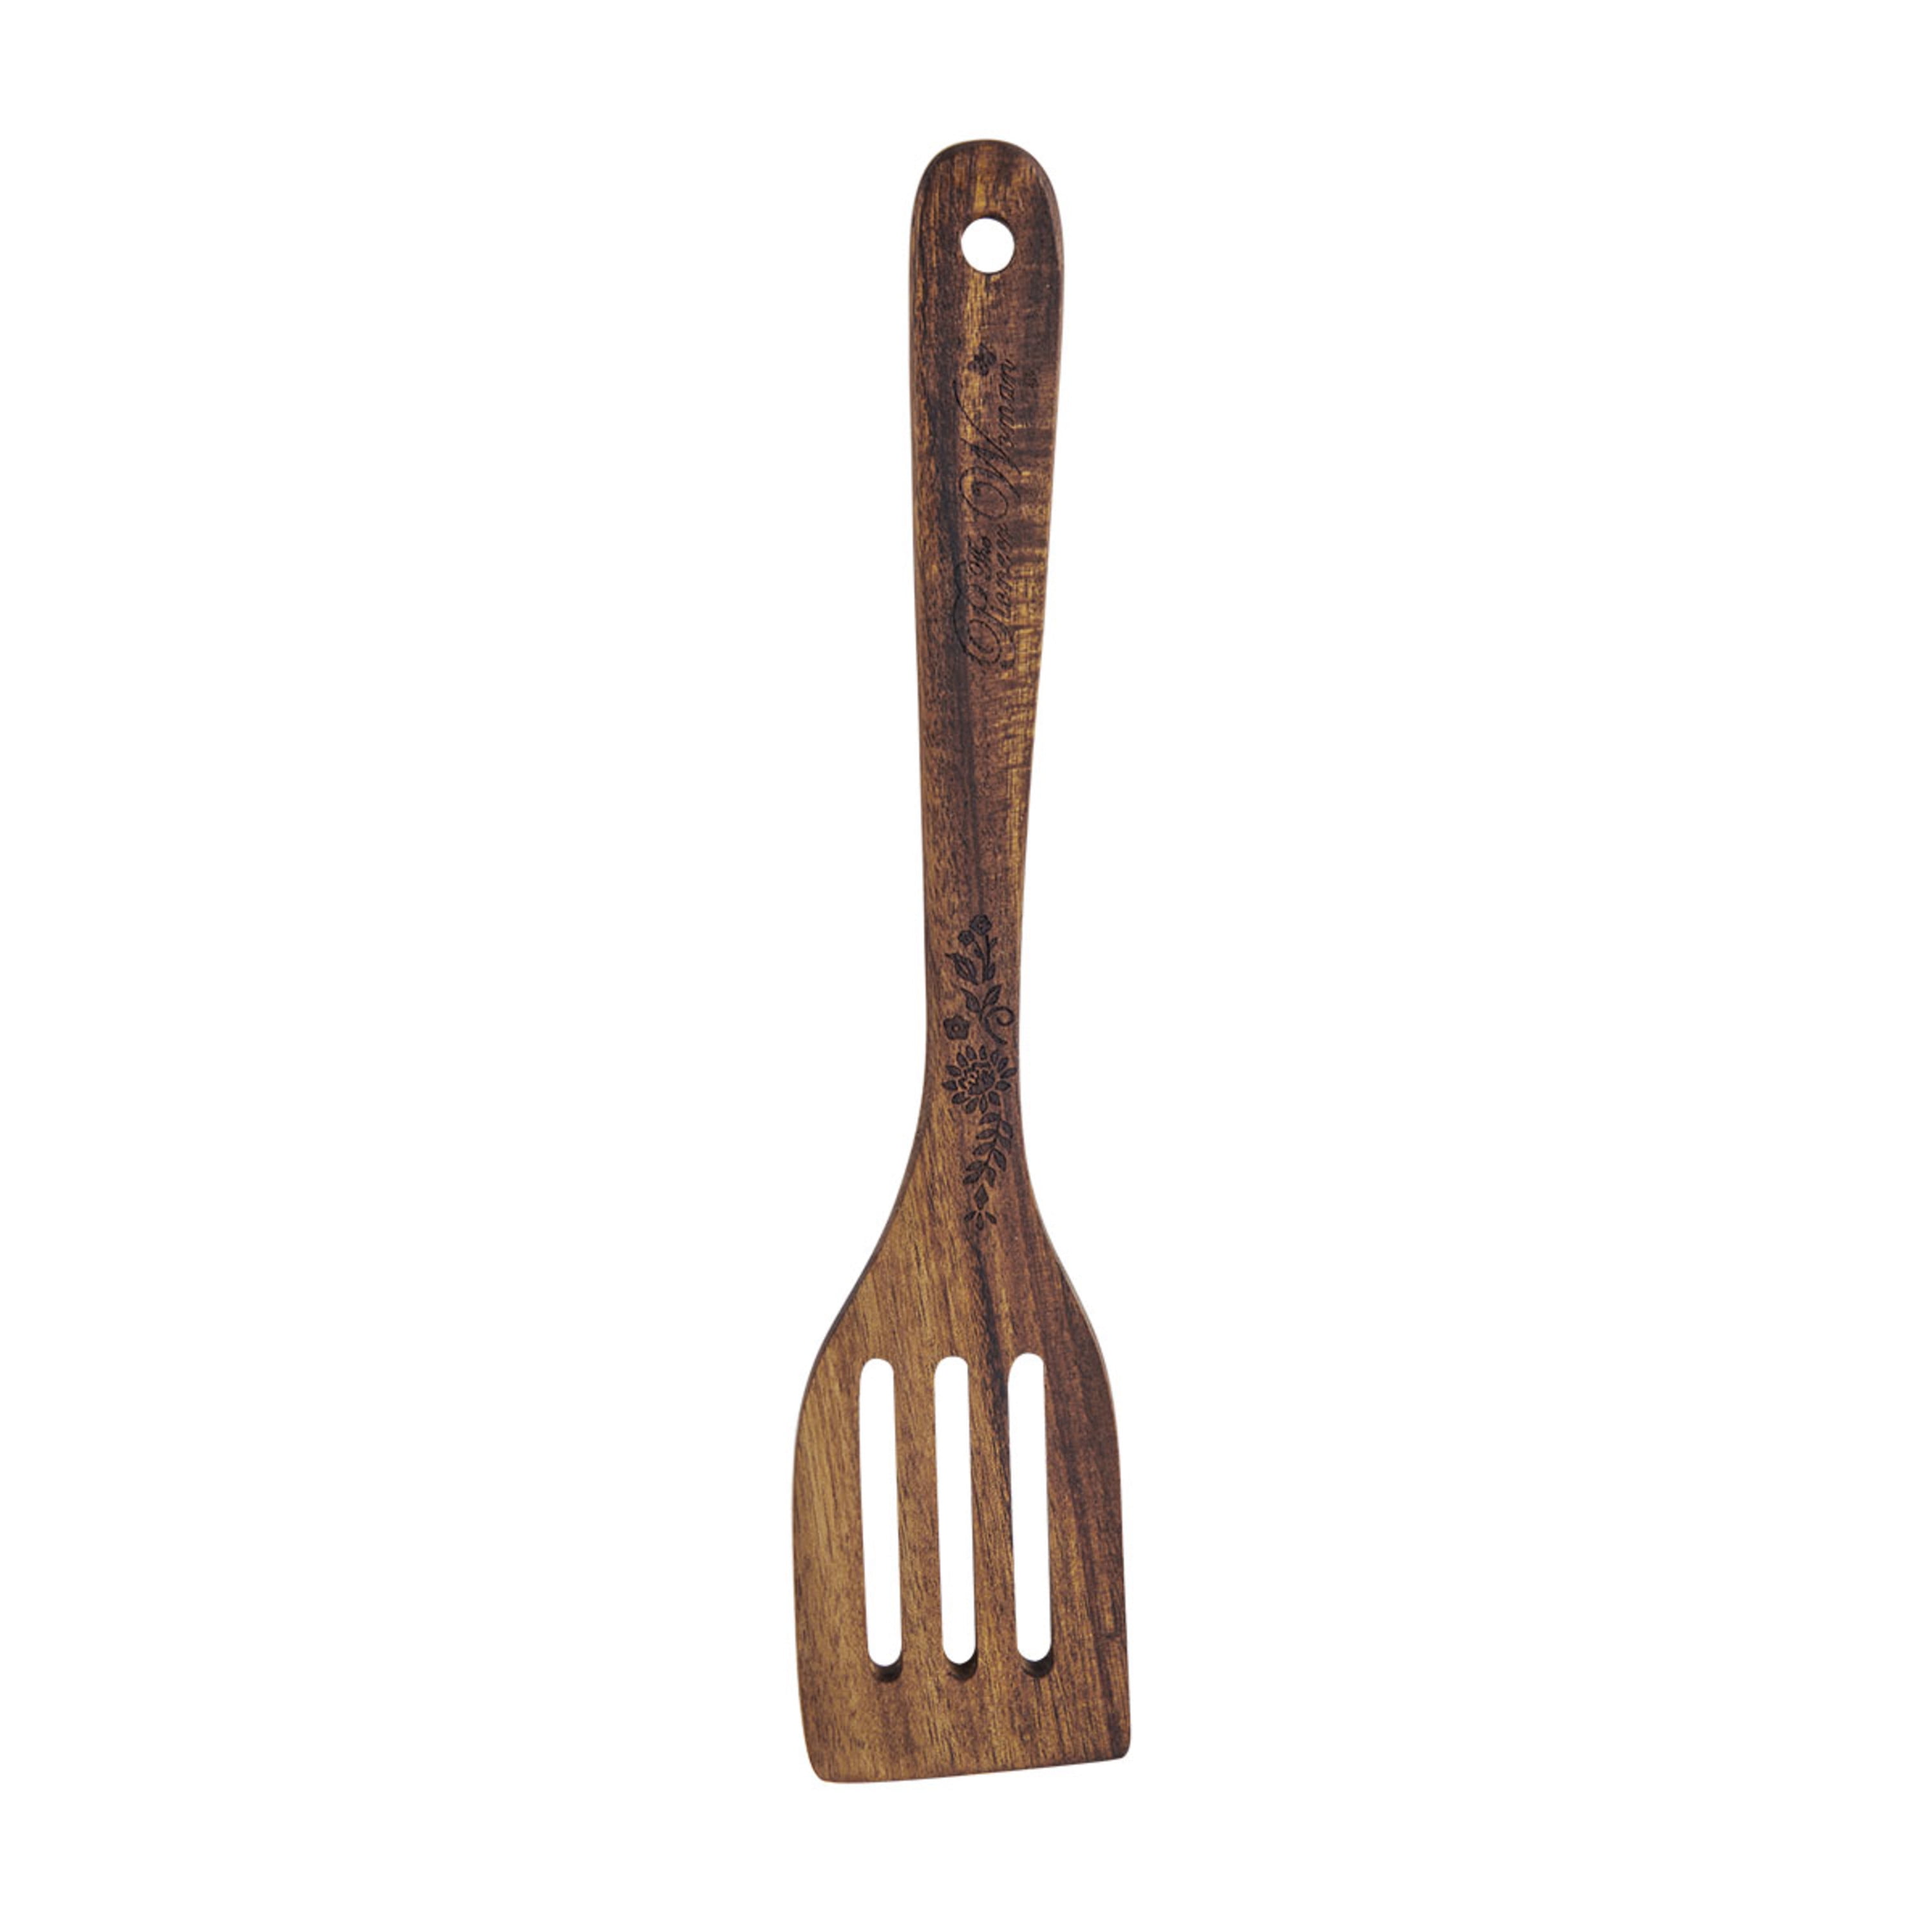 The Pioneer Woman Wooden Spoon 11 7/8in